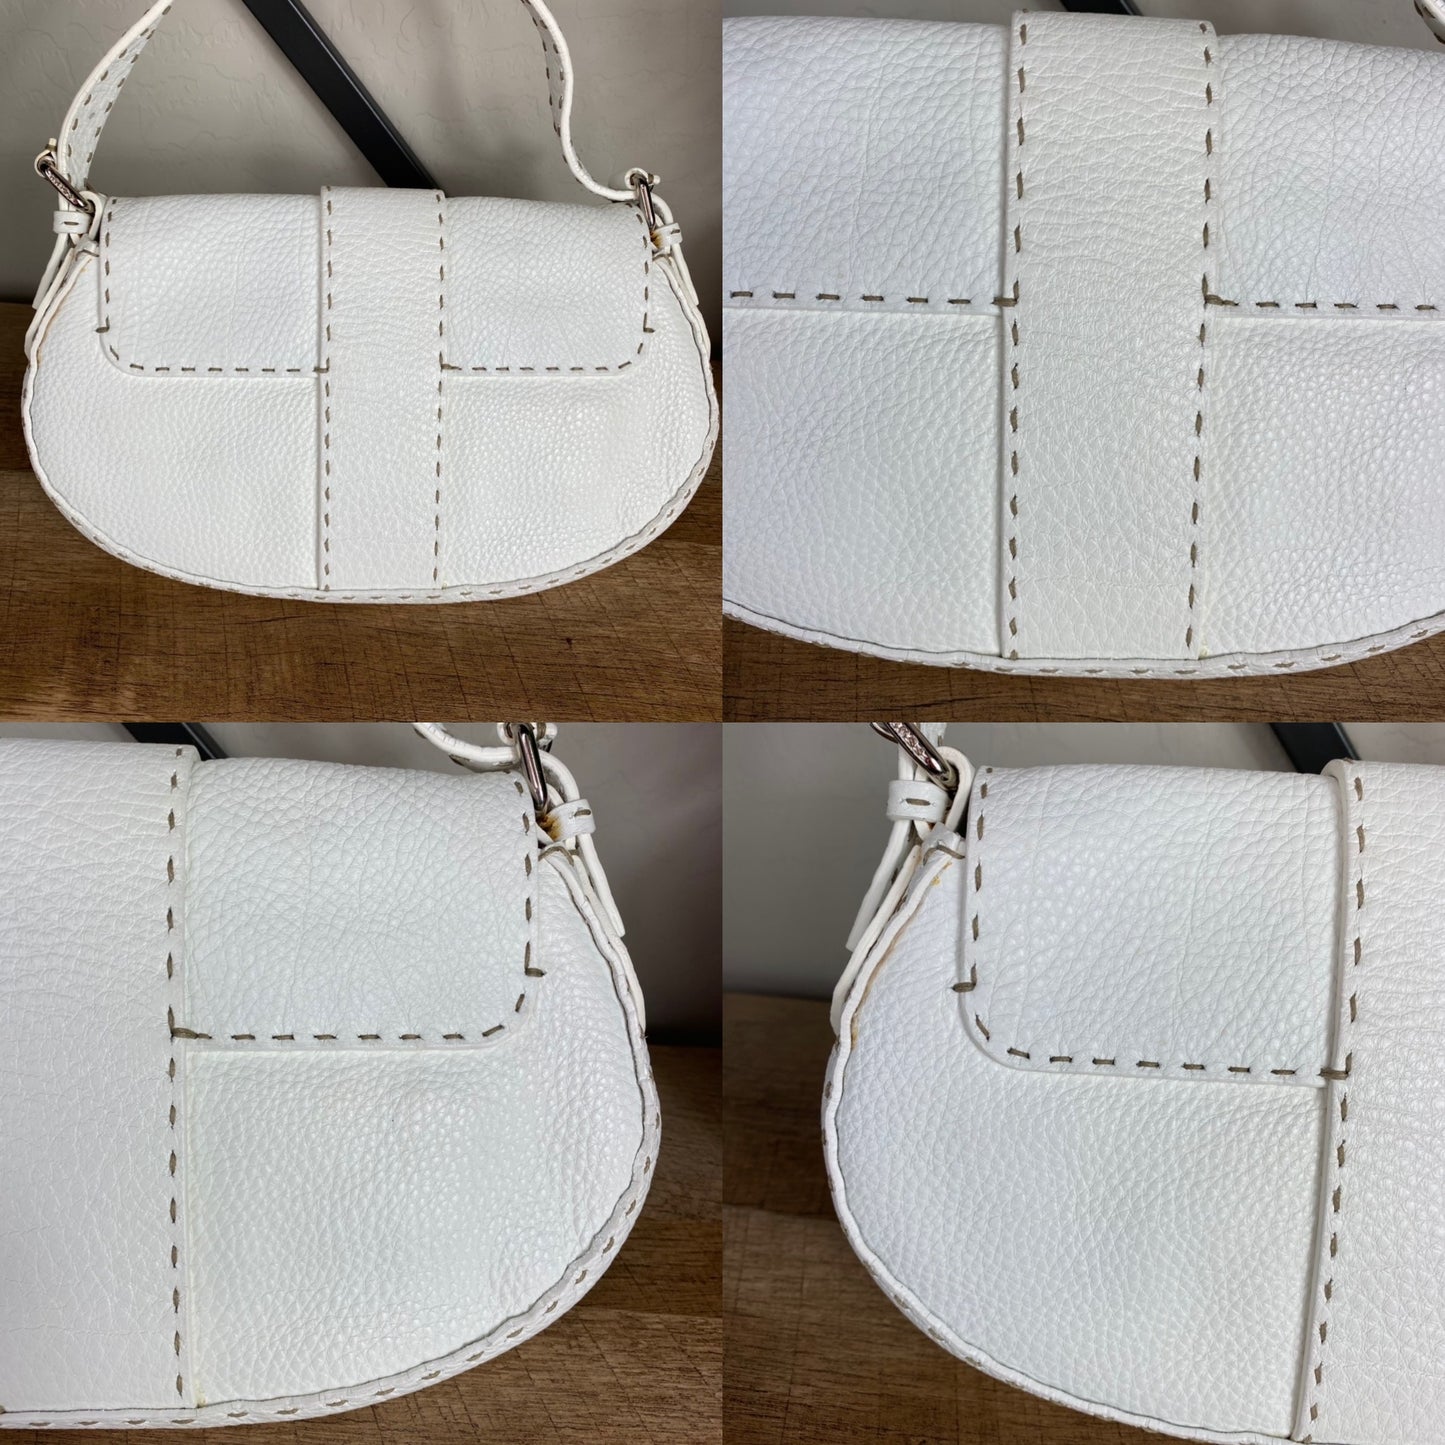 Fendi Selleria Leather Baguette Flap Bag